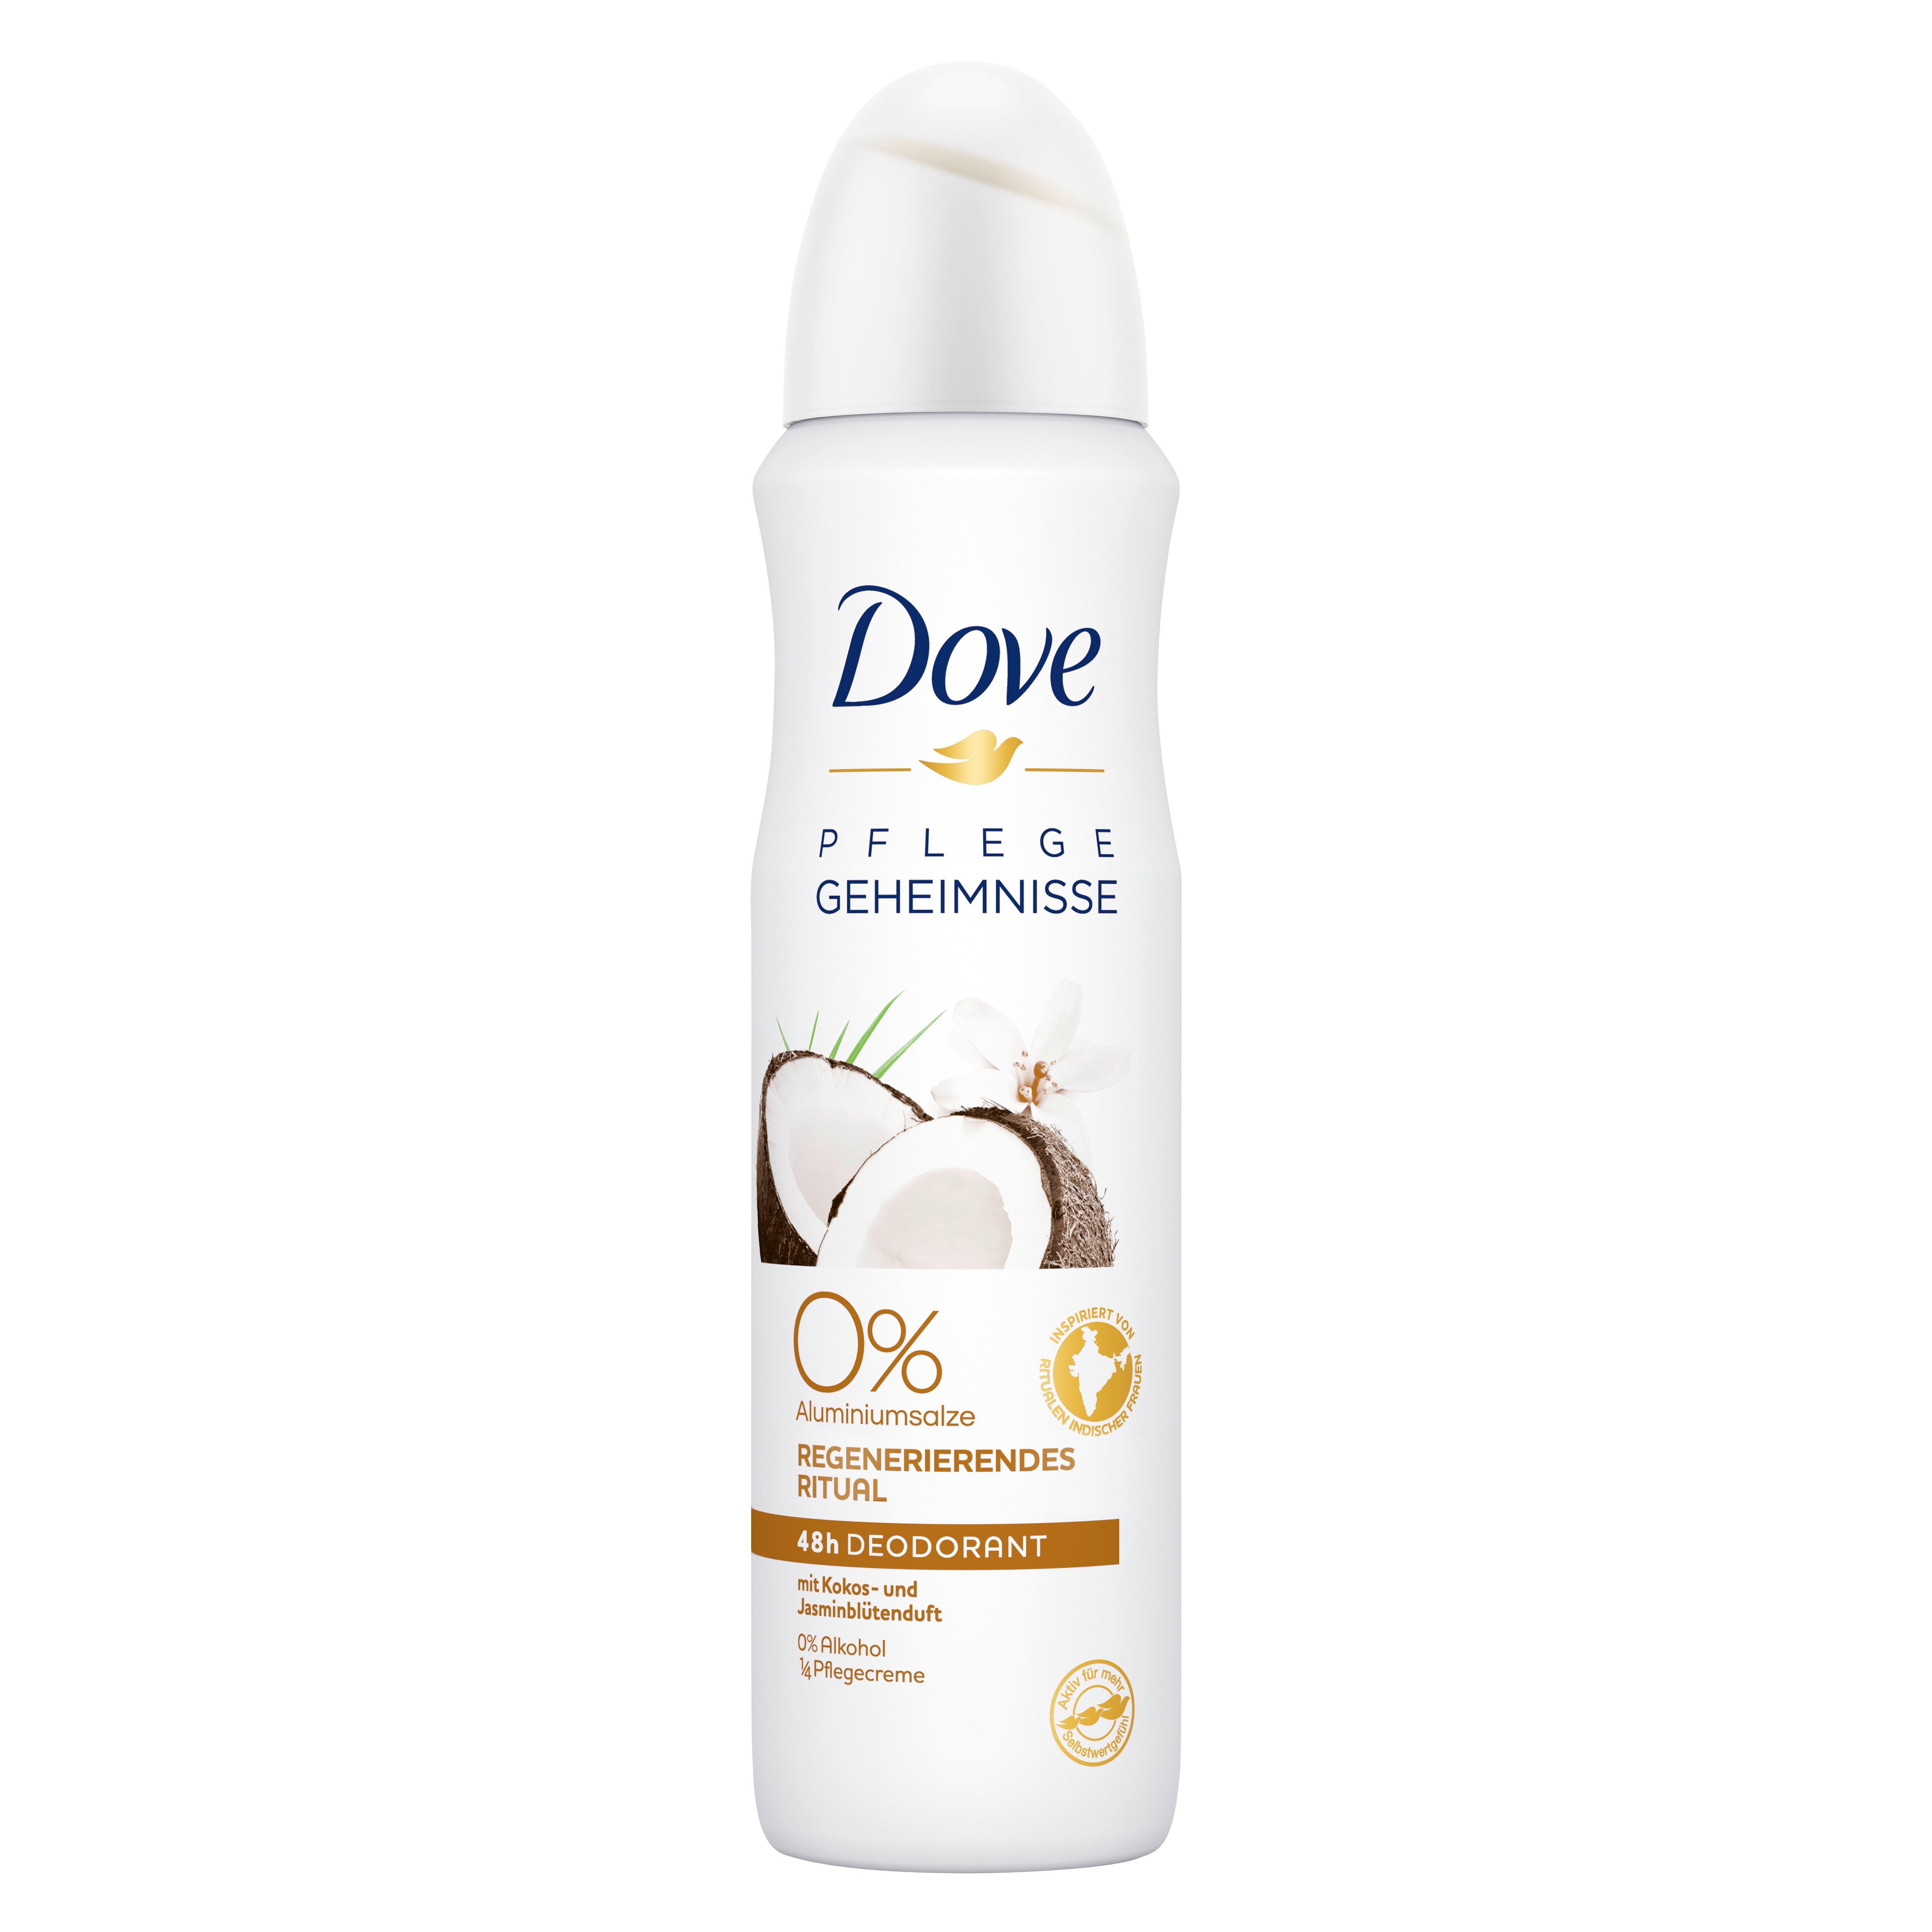 Image of Dove Deodorant Pflegegeheimnisse Regenerierendes Ritual mit Kokos- und Jasminblütenduft 0% Aluminiumsalze - 150 ml